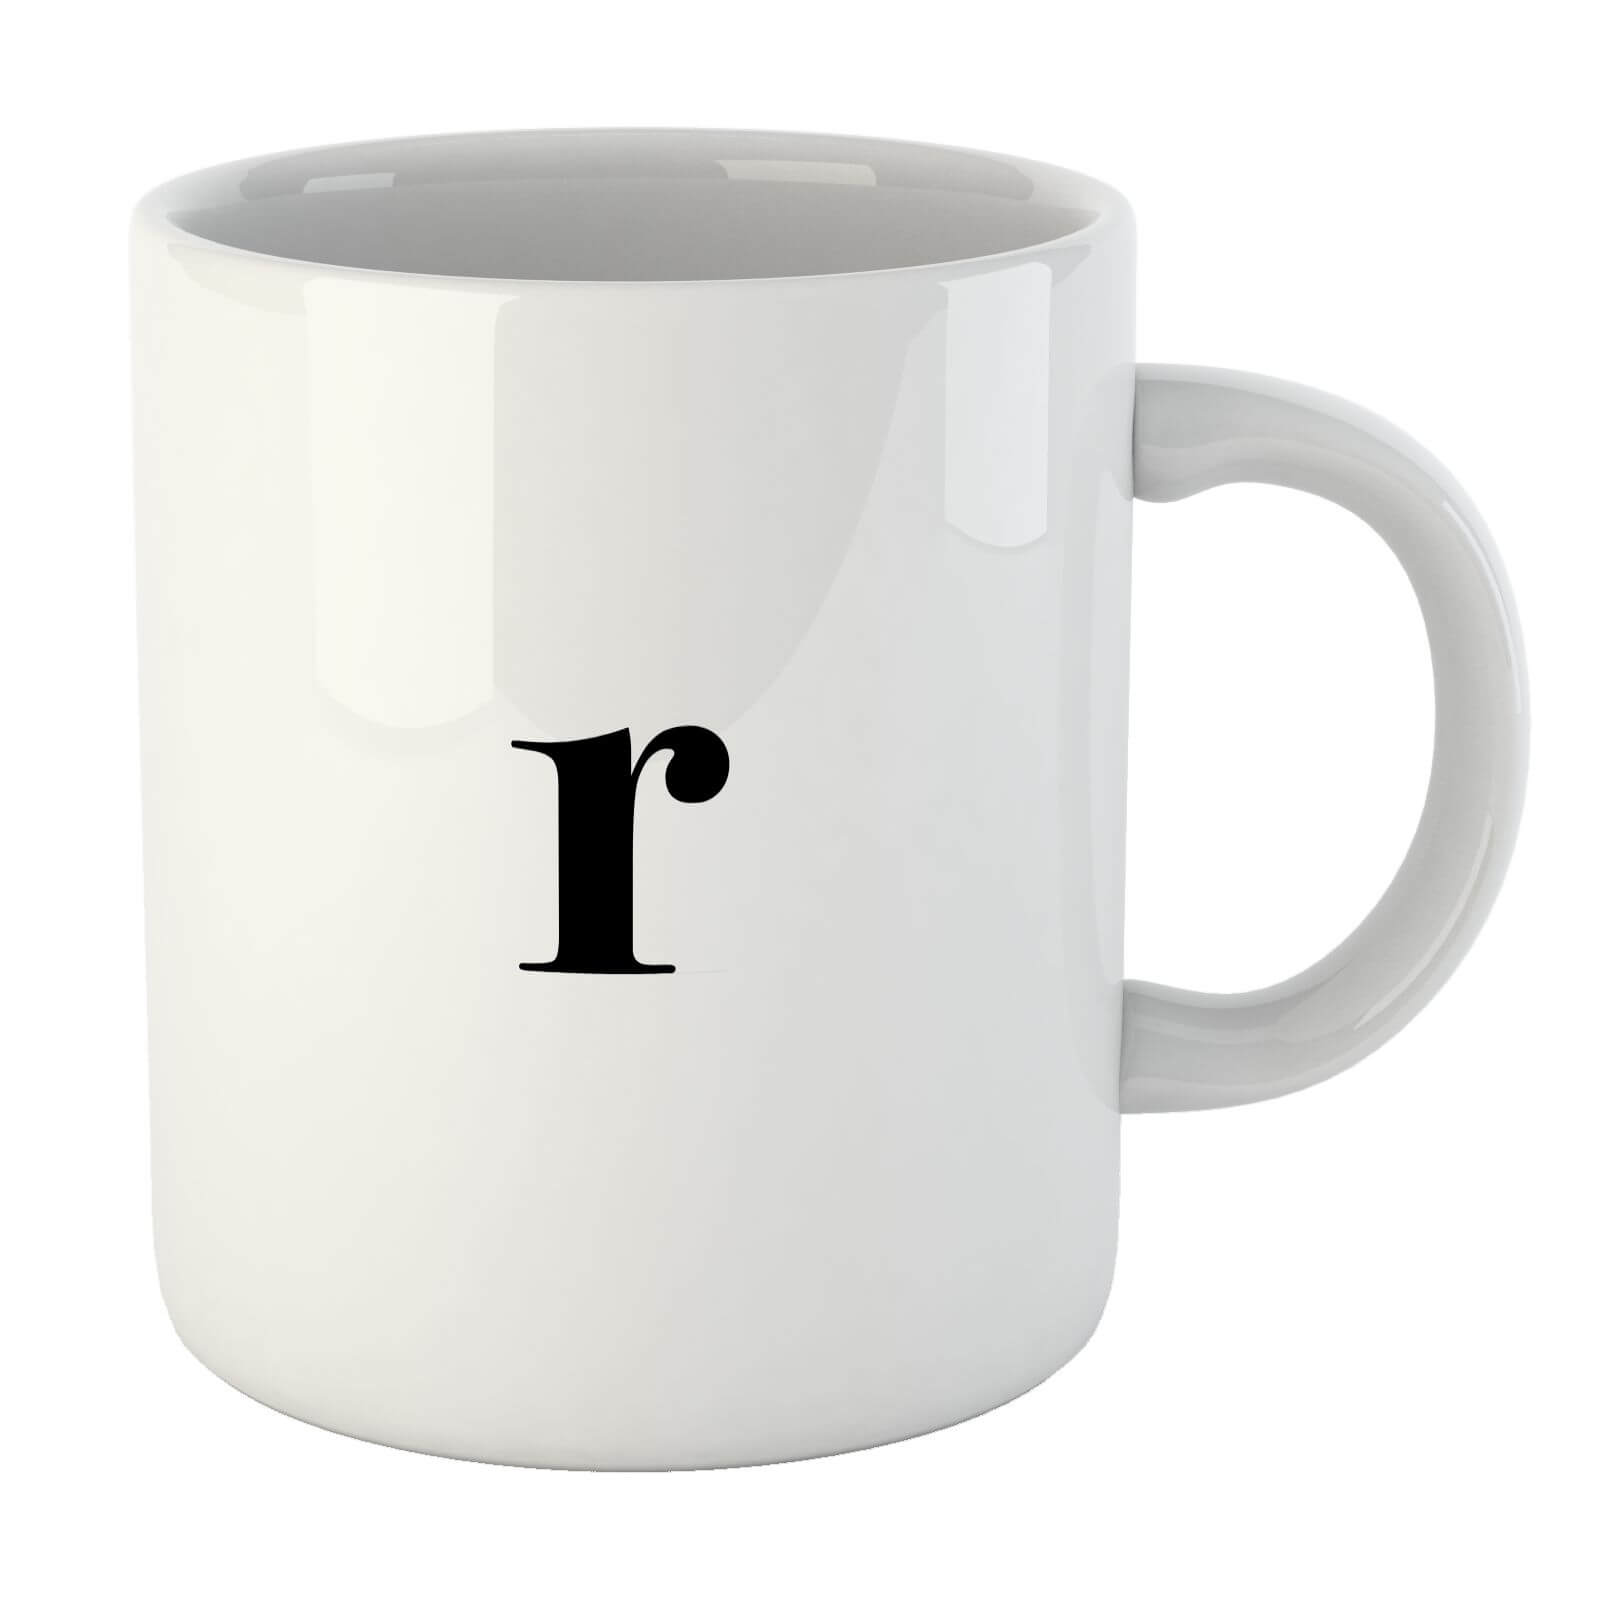 Bodoni Alphabet Mugs - R Mug